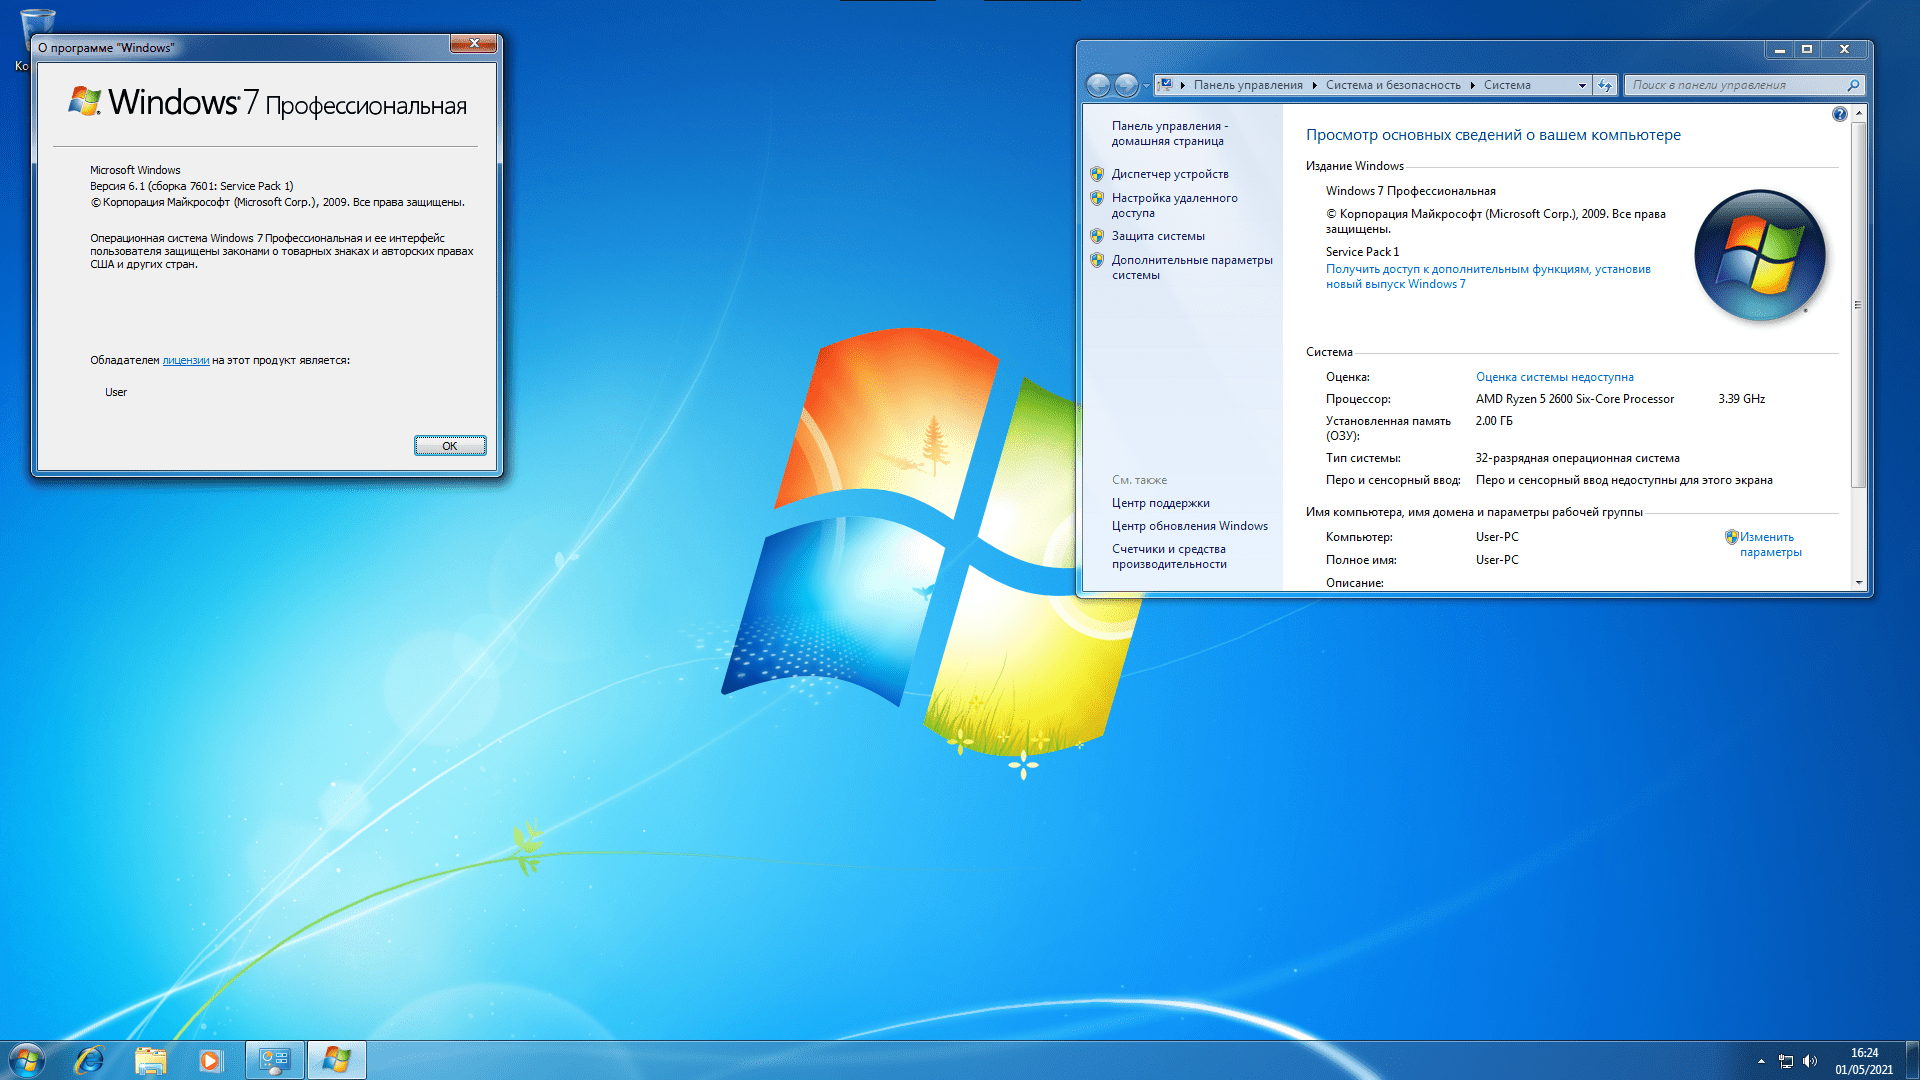 Windows 7 Professional SP1 Full Version working